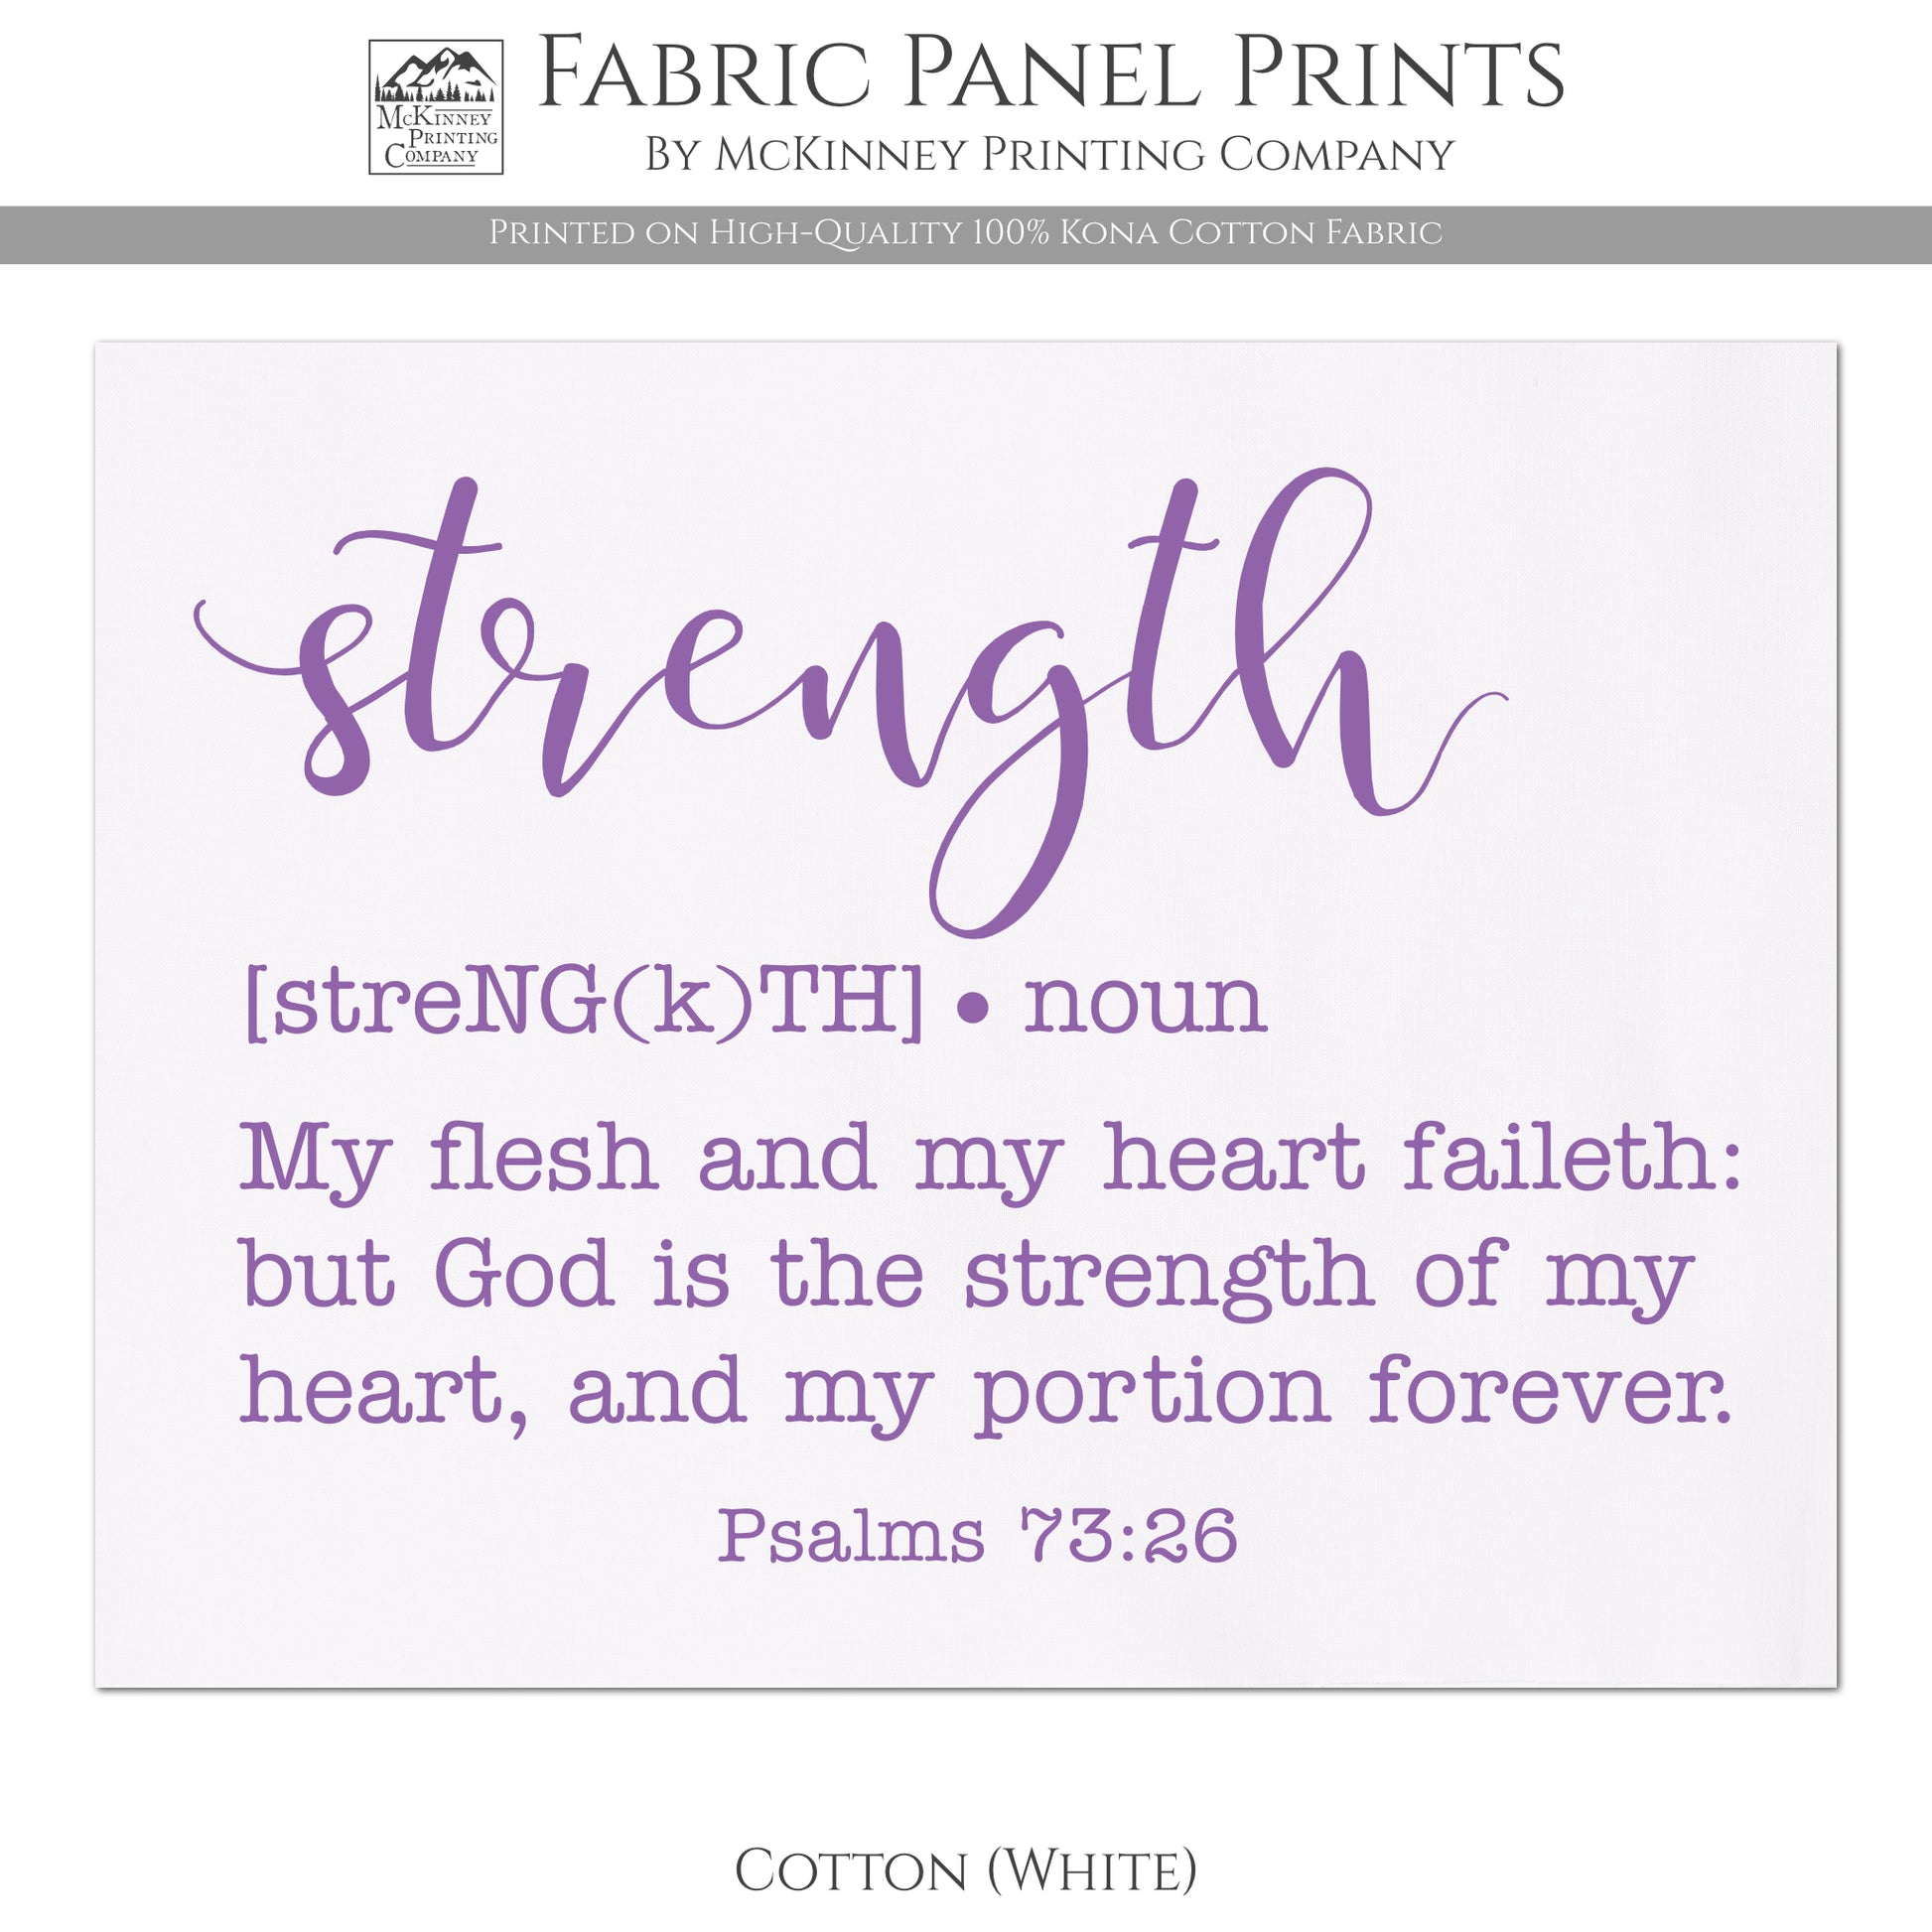 Strength - My Flesh and my heart faileth: but God is the strength of my heart, and my portion forever. Psalms 73:26 - Fabric Panel Print - Cotton, White